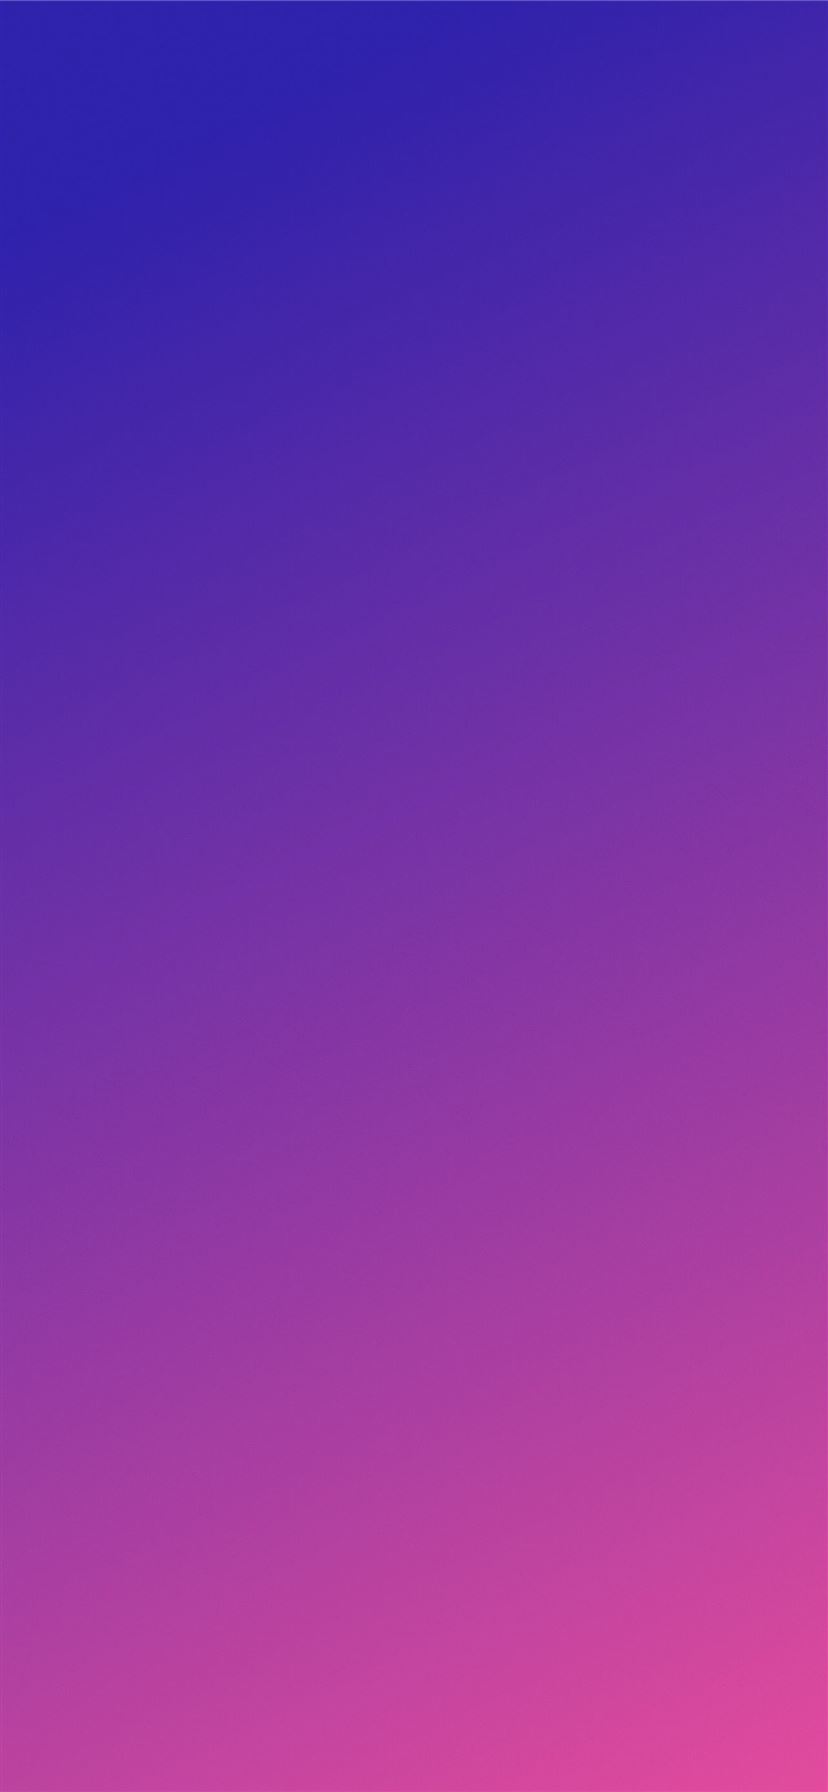 Dark blue to purple gradient iPhone 11 wallpaper 